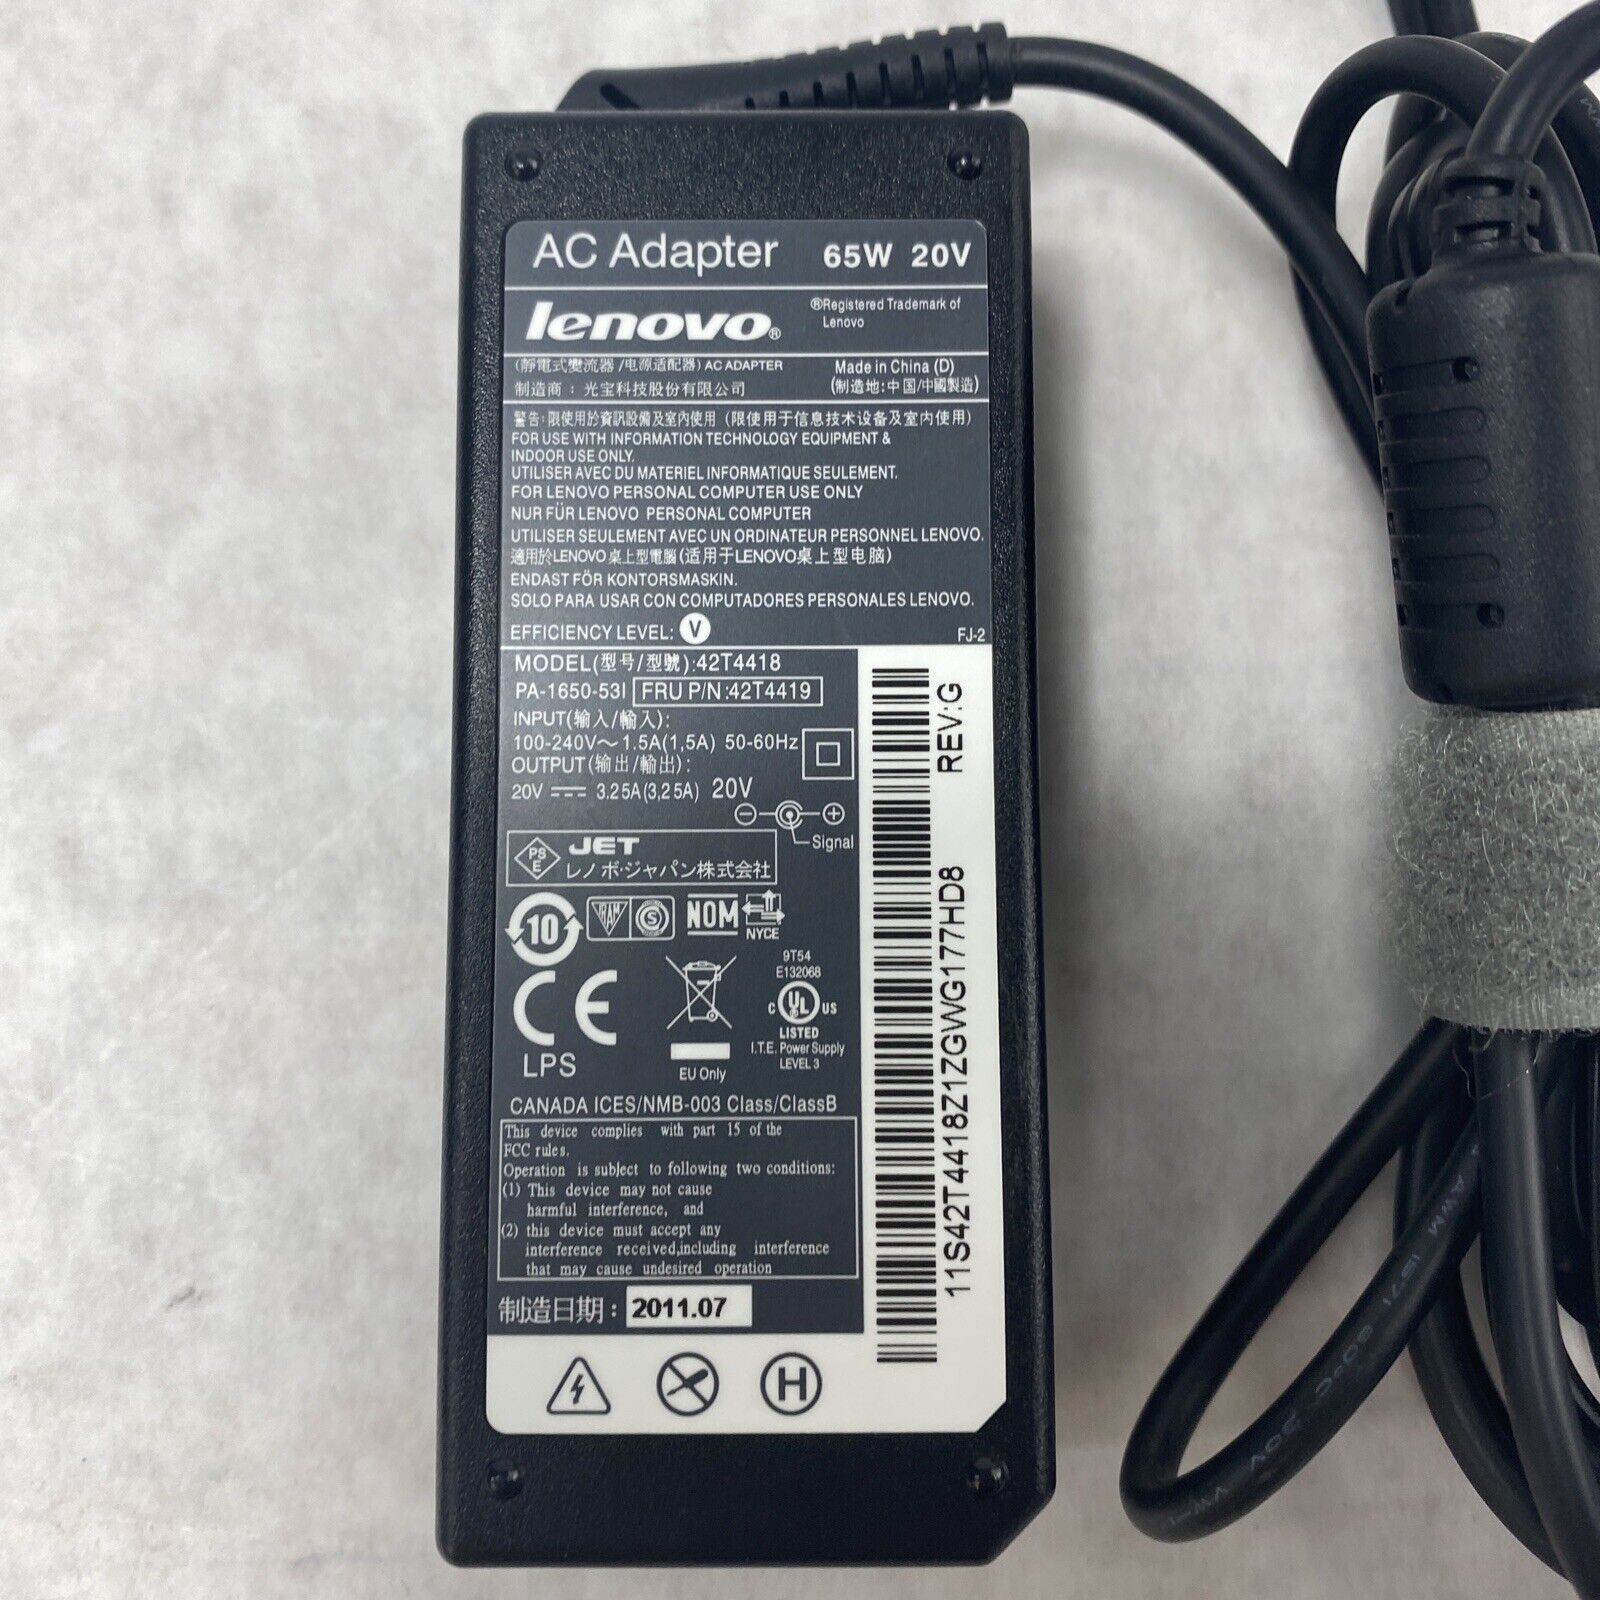 Lenovo 42T4418 AC Adapter Charger for Thinkpad L410 L420 L421 L430 L510